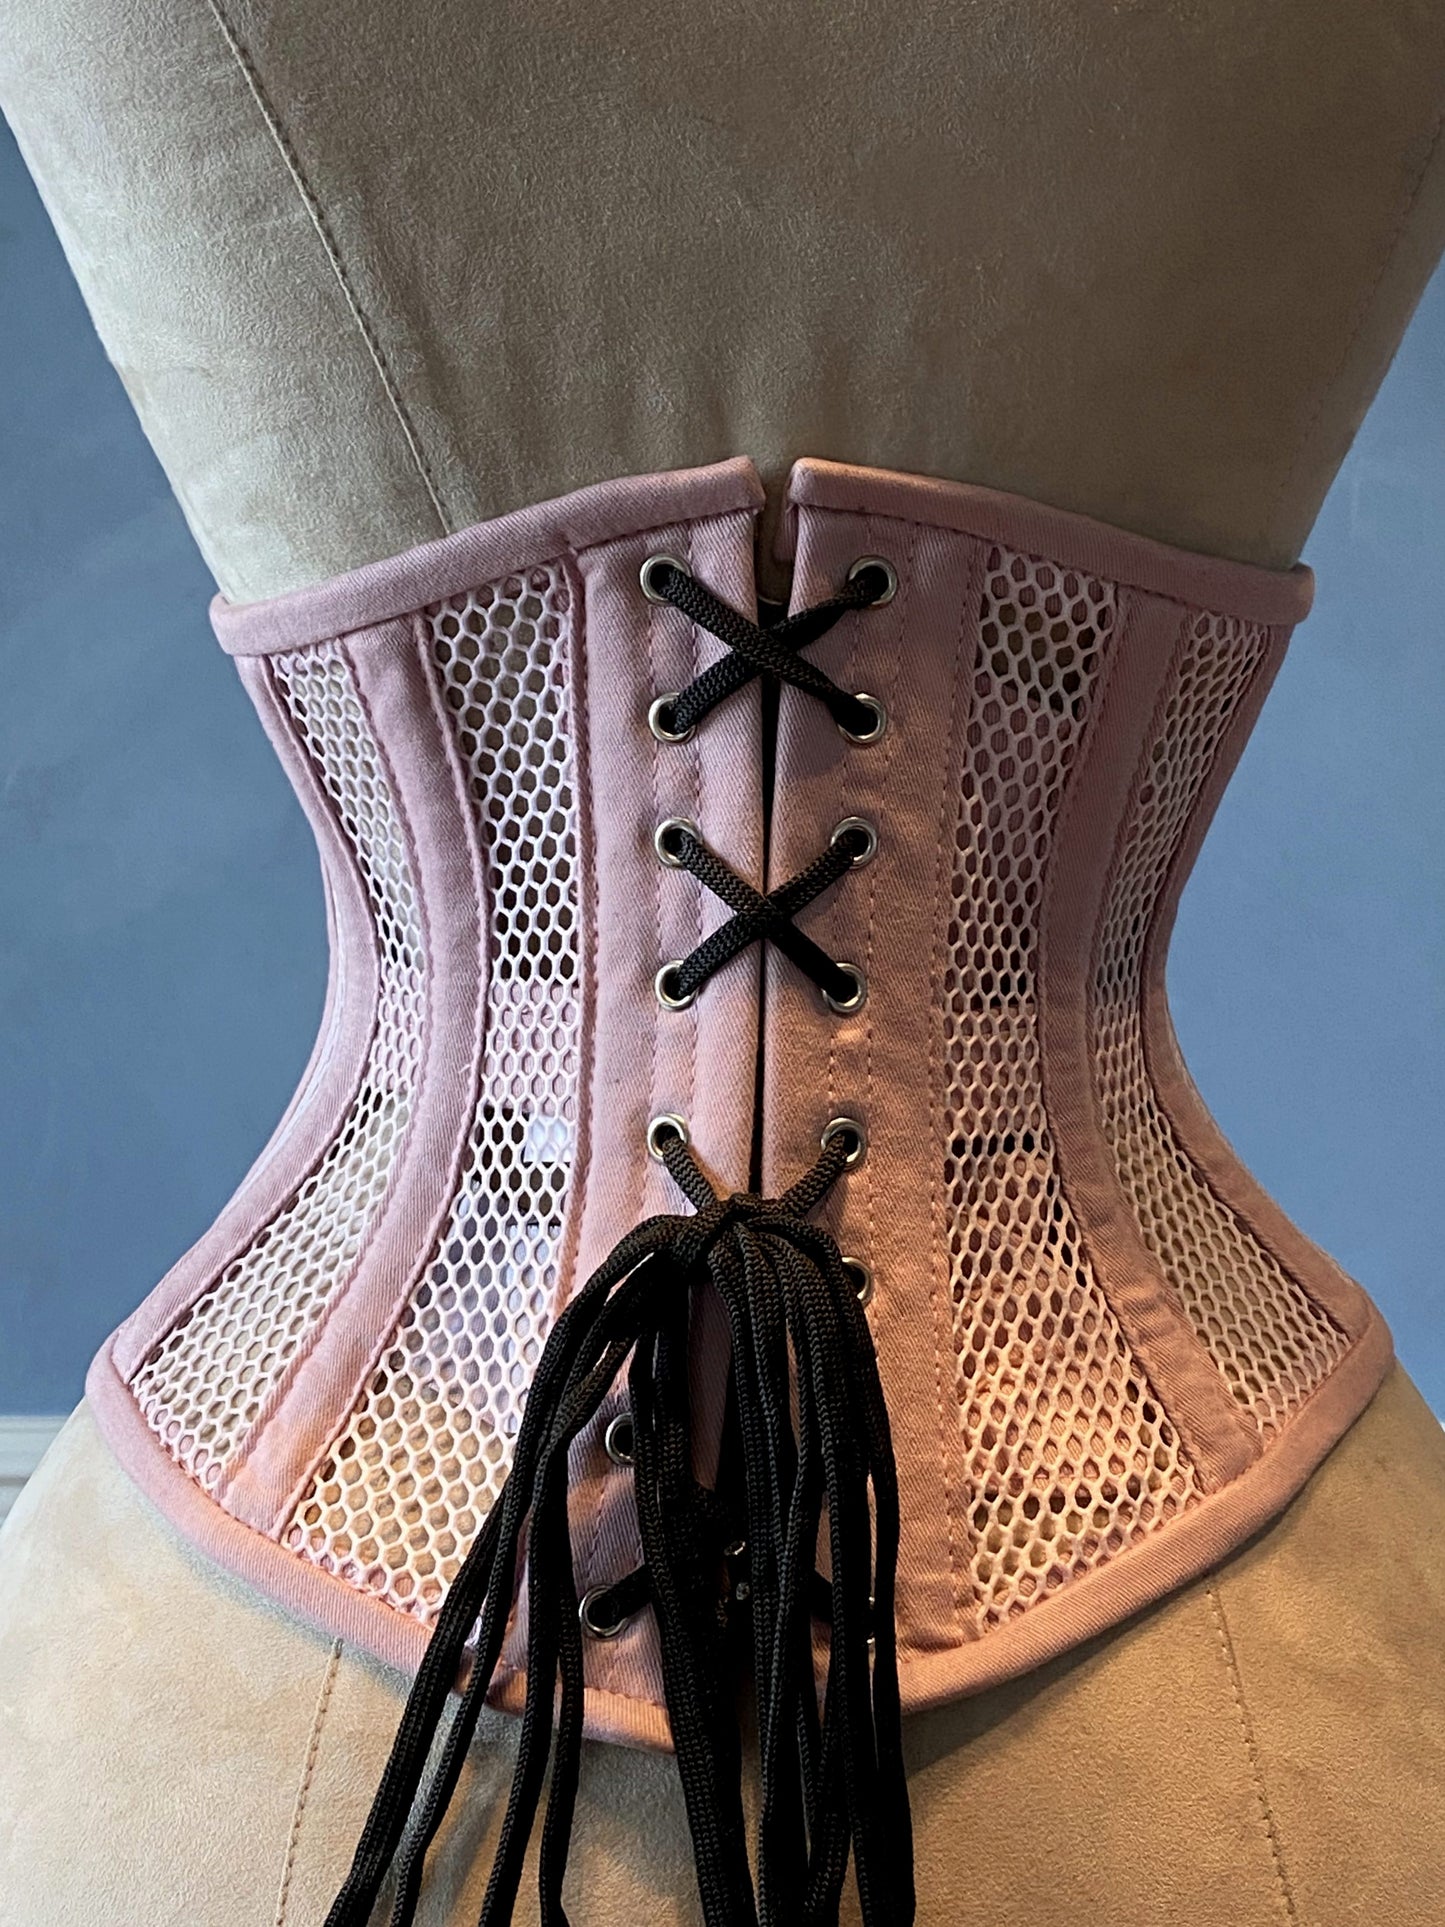 Real steel boned underbust underwear corset from transparent mesh